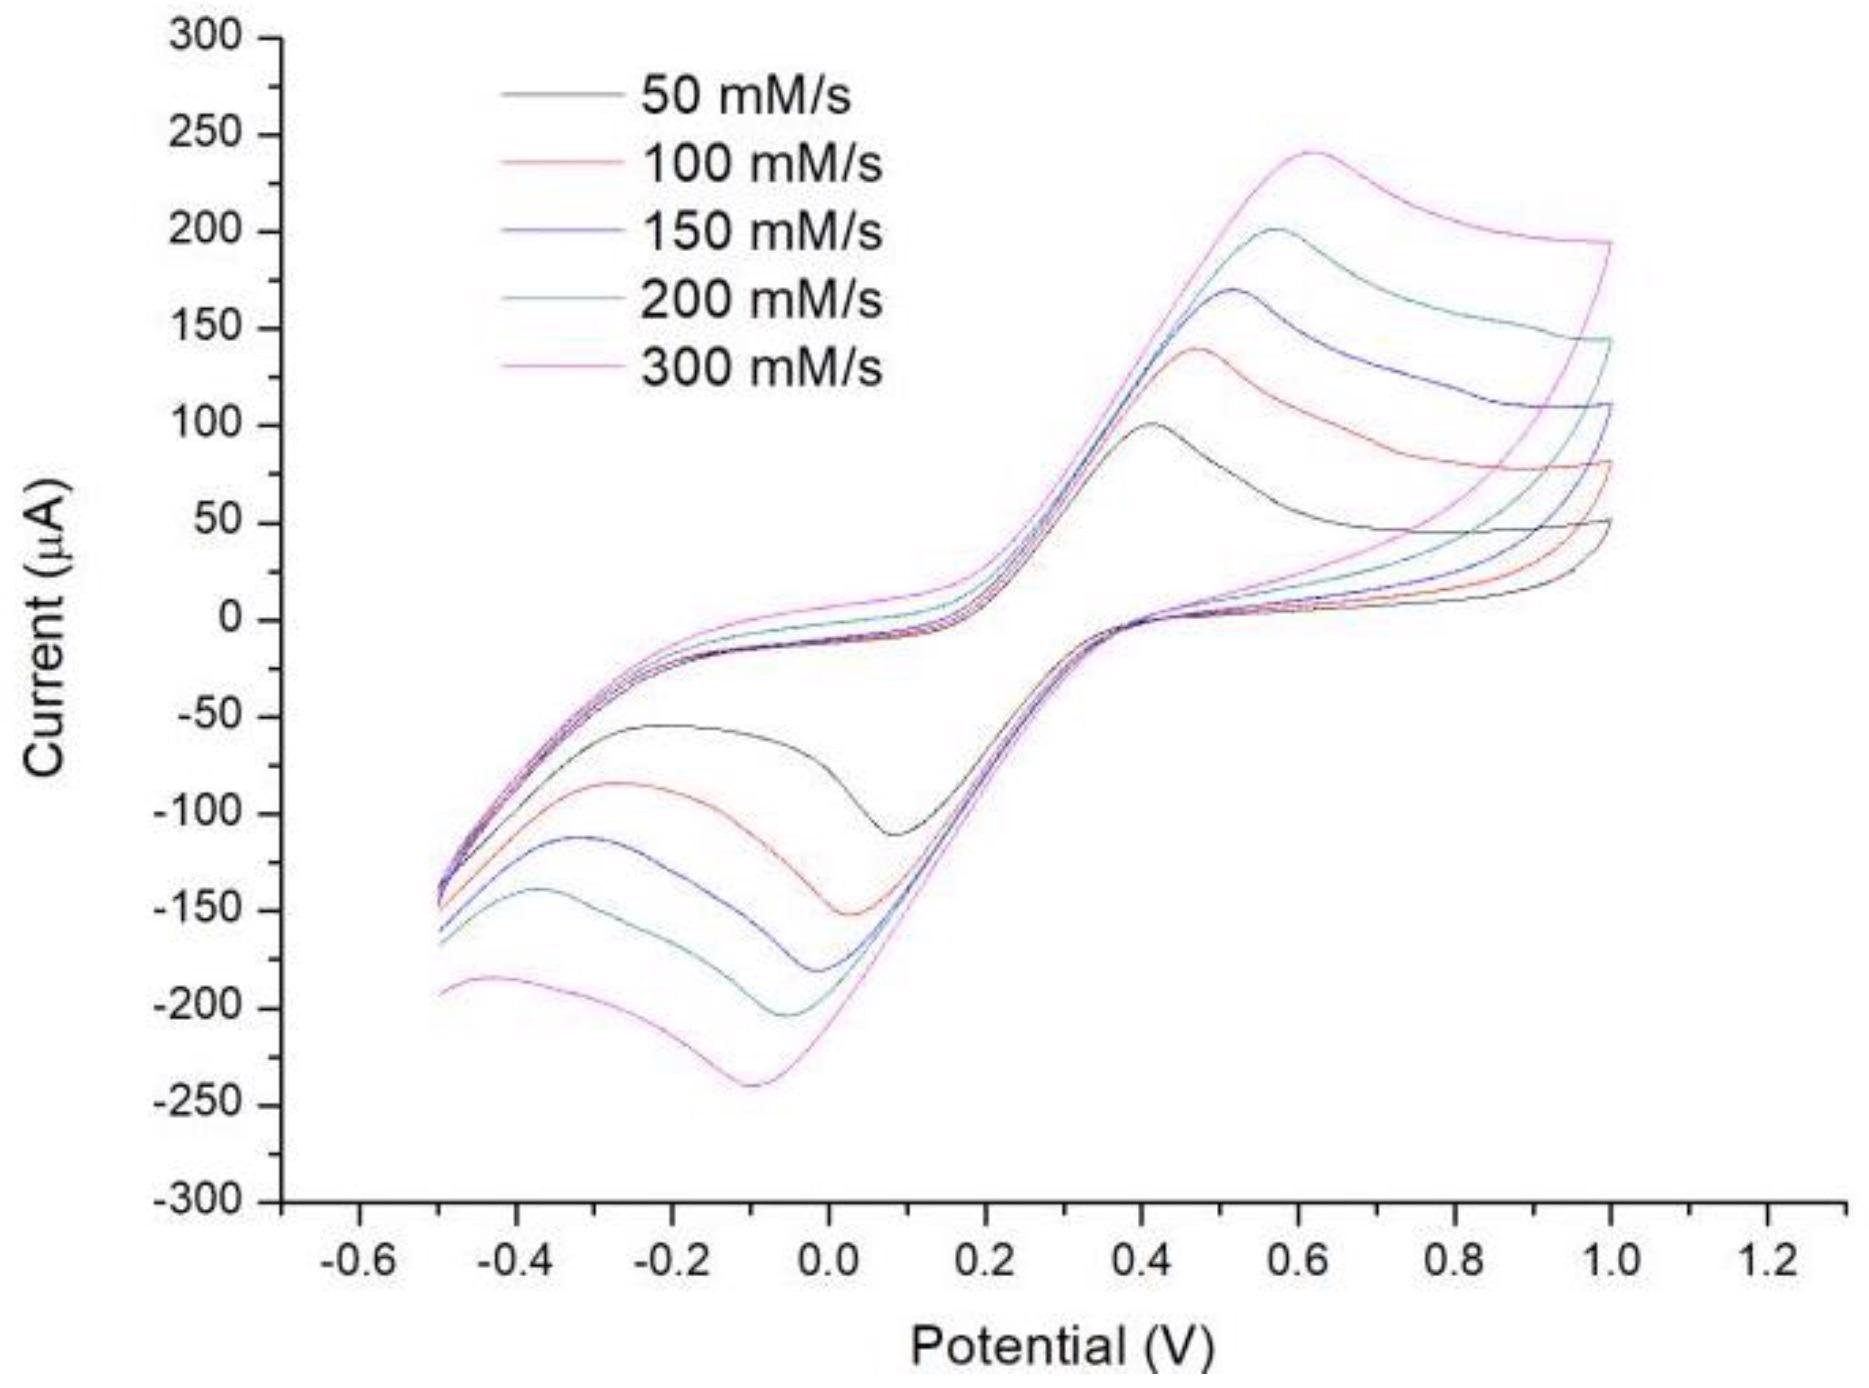 Measurement of cyclic voltammetry (CV) curves at scan rates of 50 mV/s, 100 mV/s, 150 mV/s, 200 mV/s, and 300 mV/s.